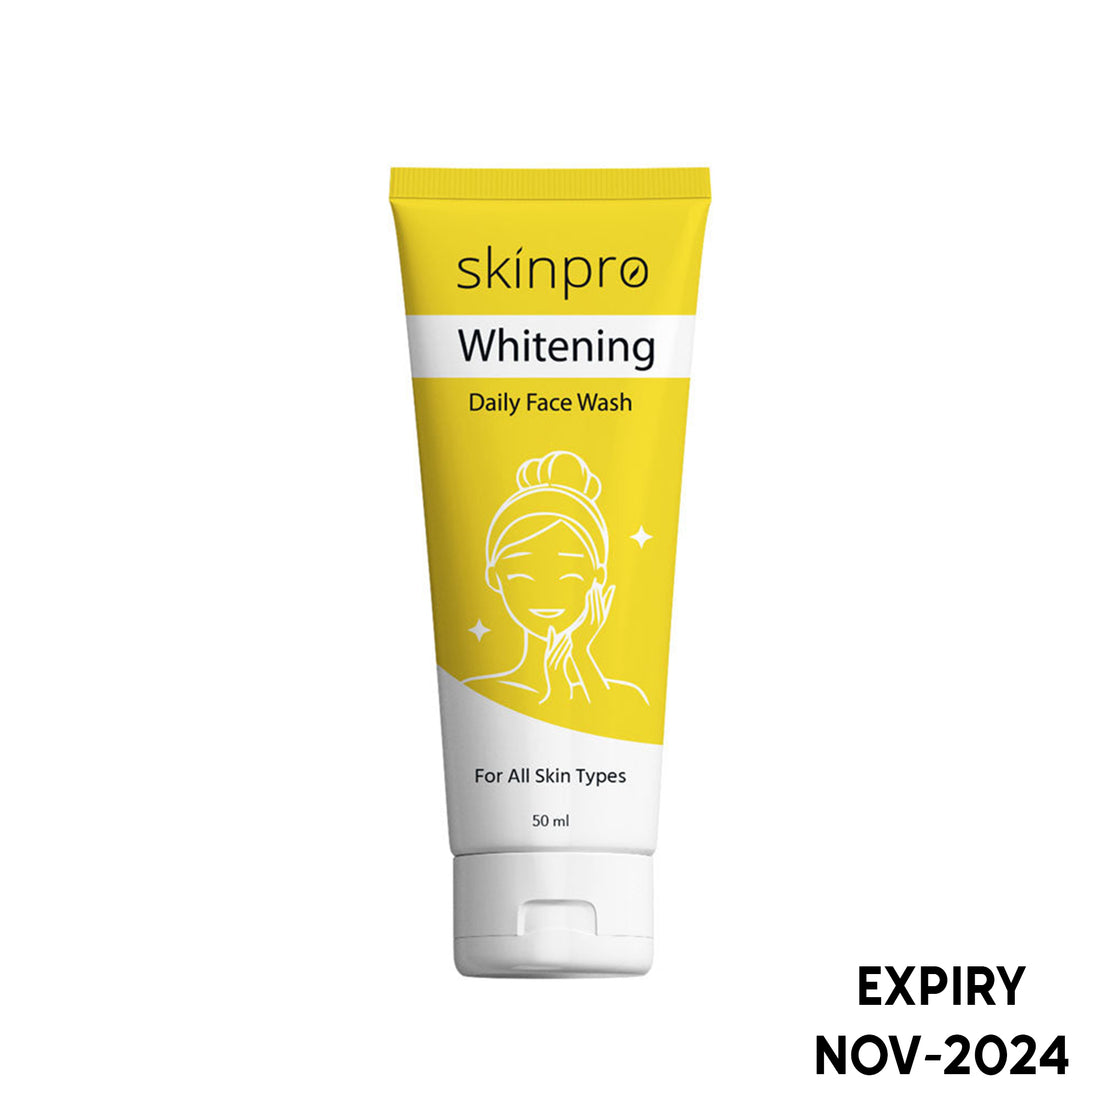 Skinpro Whitening Daily Face Wash (50ml)